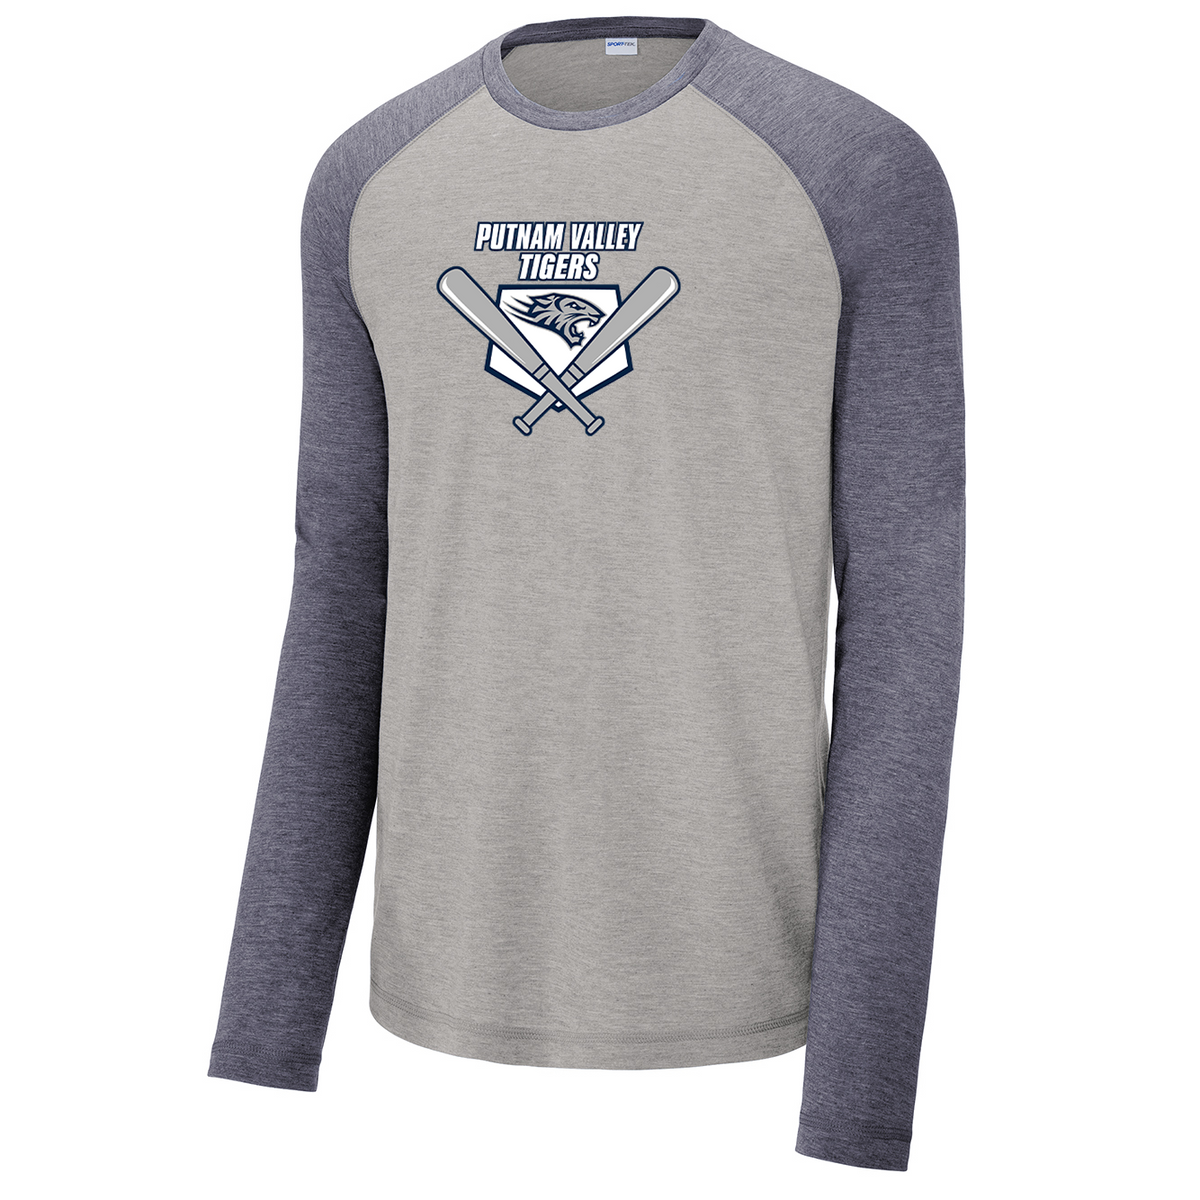 Putnam Valley Baseball Long Sleeve CottonTouch Performance Shirt